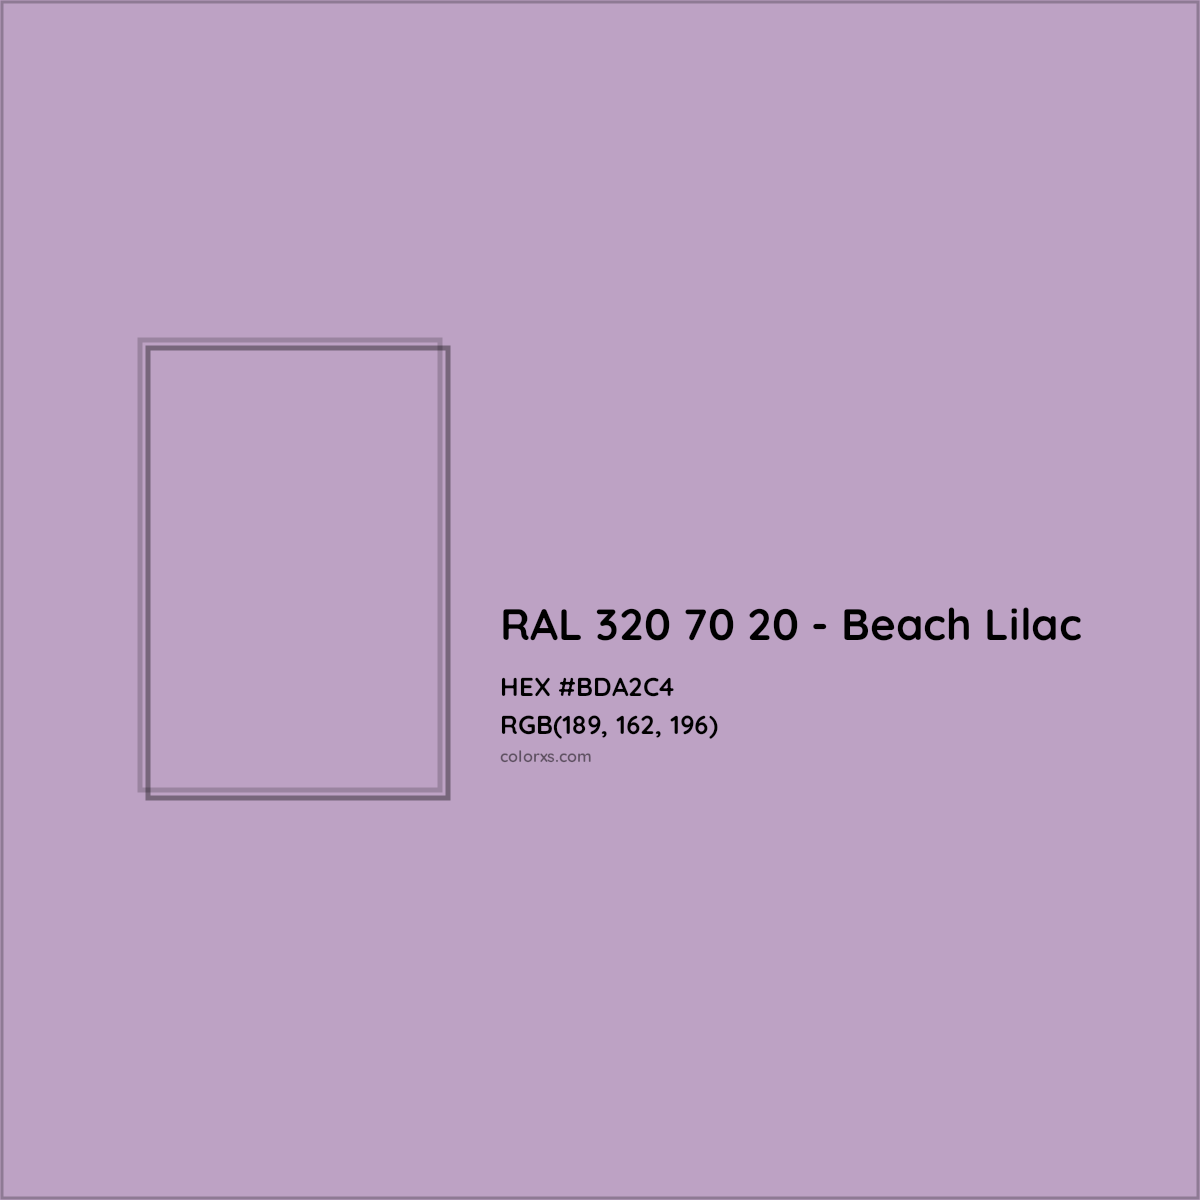 HEX #BDA2C4 RAL 320 70 20 - Beach Lilac CMS RAL Design - Color Code